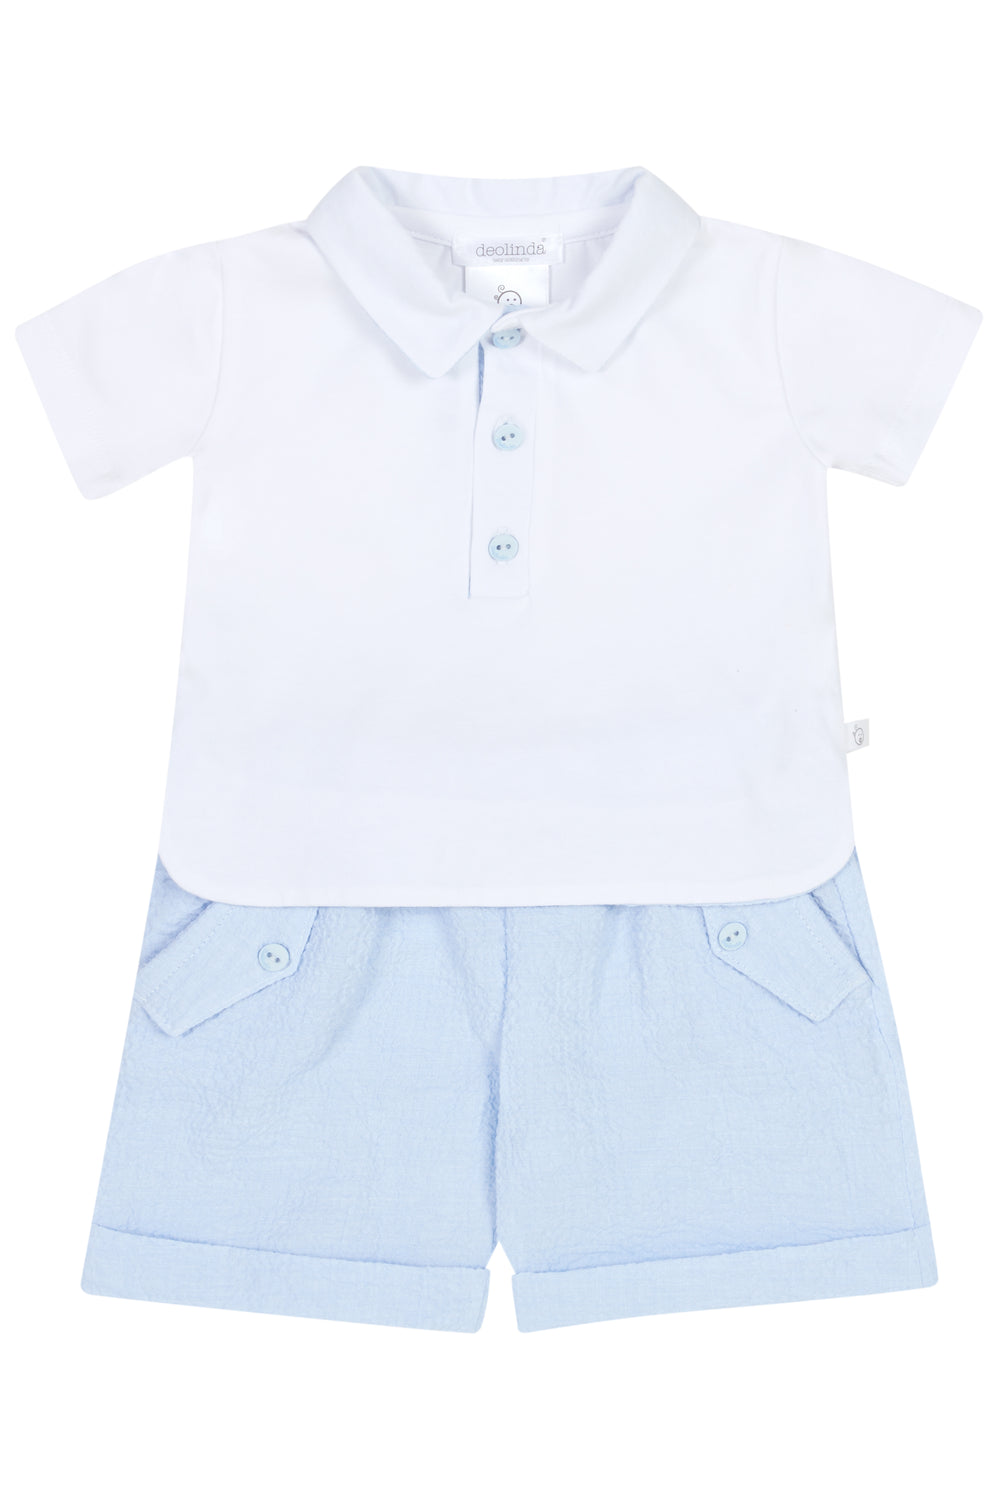 Deolinda PREORDER "Miles" Blue Polo Shirt & Shorts | Millie and John